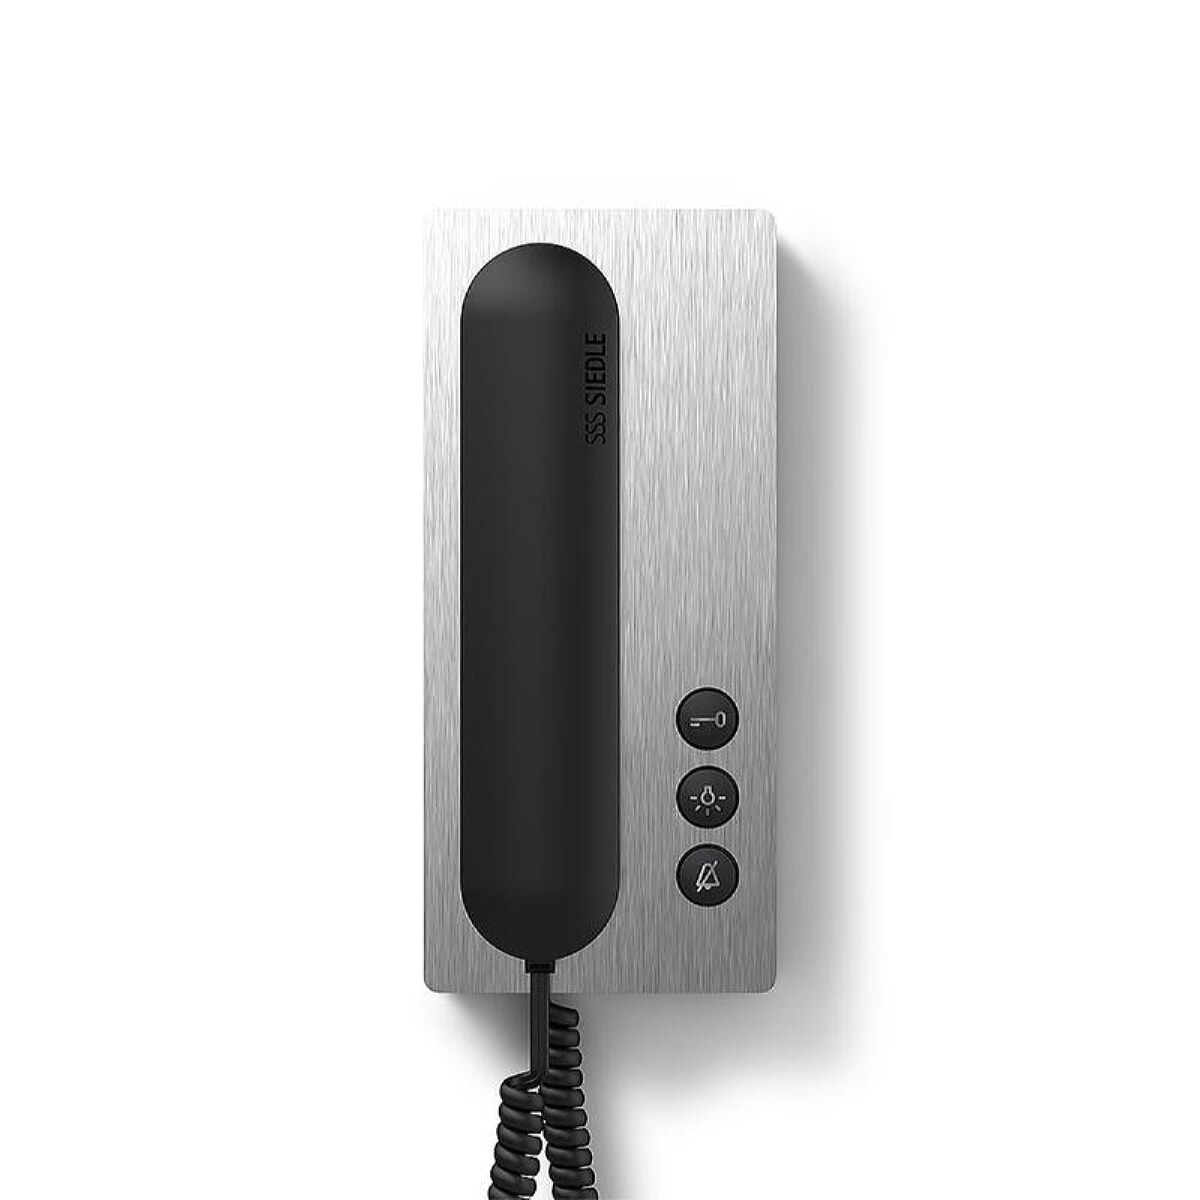 Siedle Haustelefon BTS 850-02 E/S edelstahl-schwarz